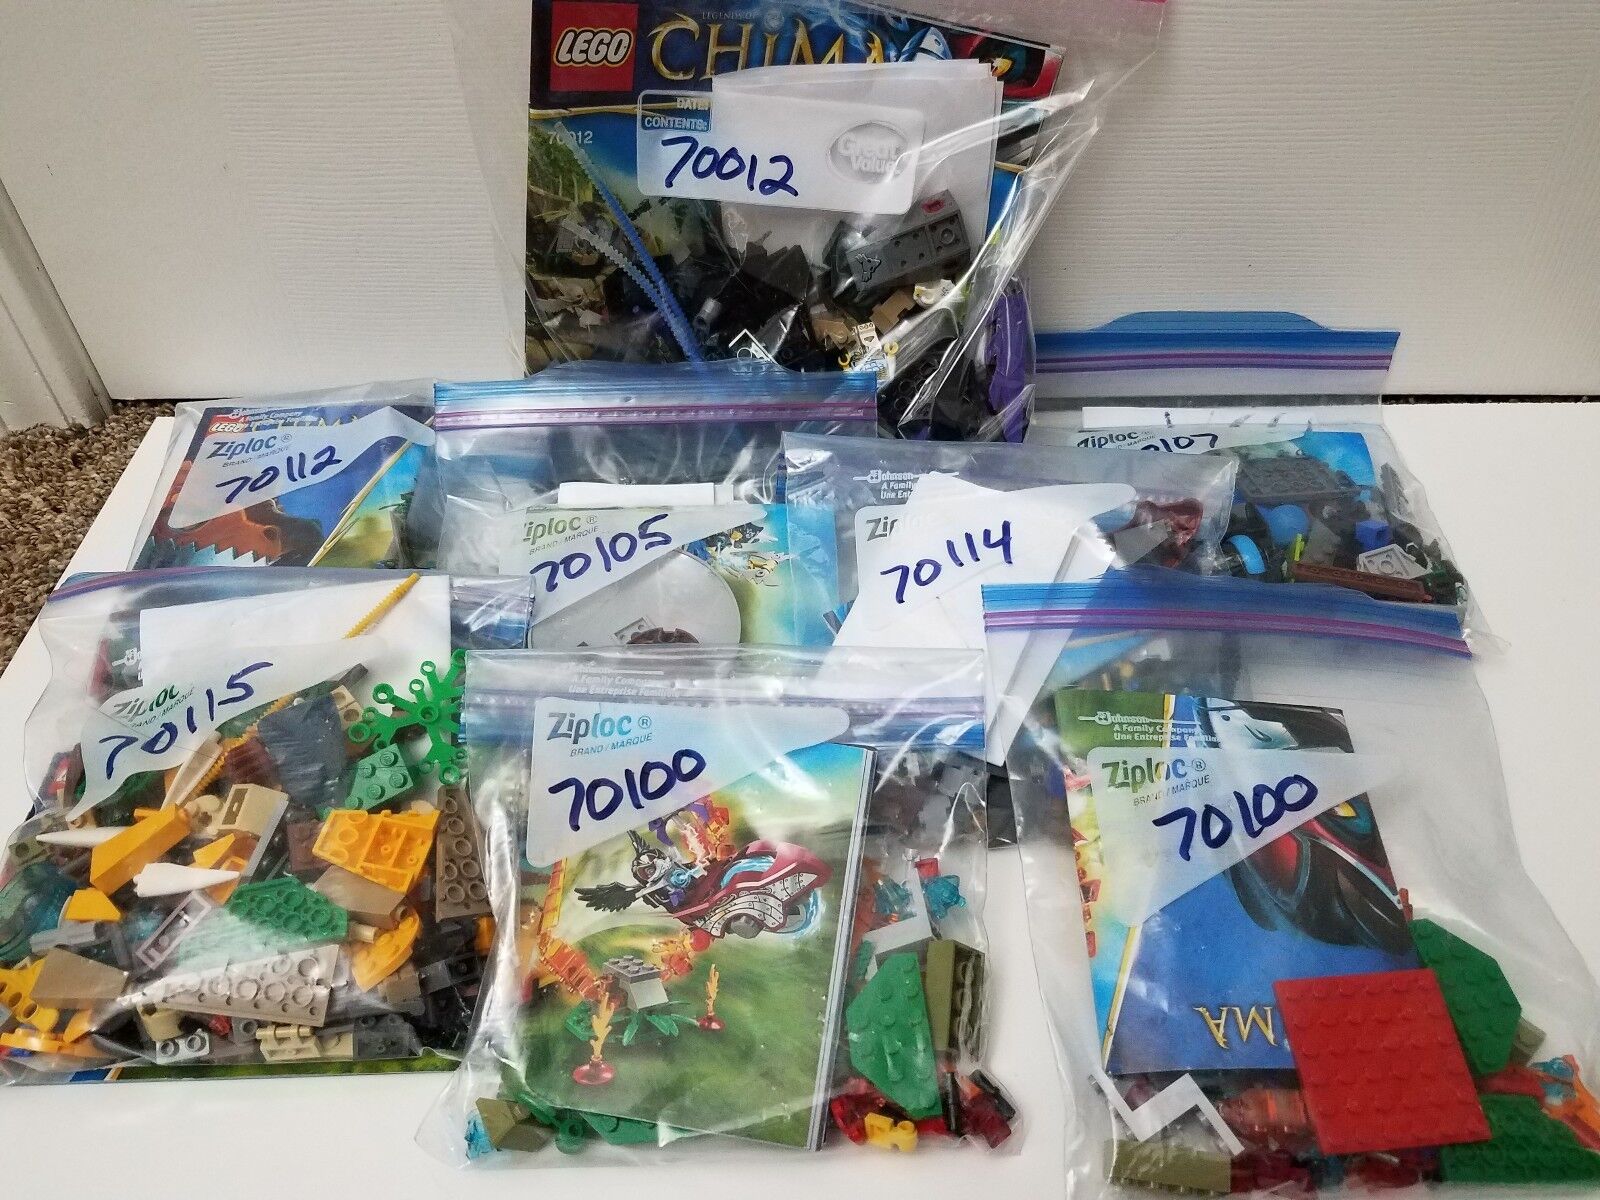 LEGO LEGENDS OF CHIMA 70012 70100 70105 70107 70112 70114 70115 Minifigures